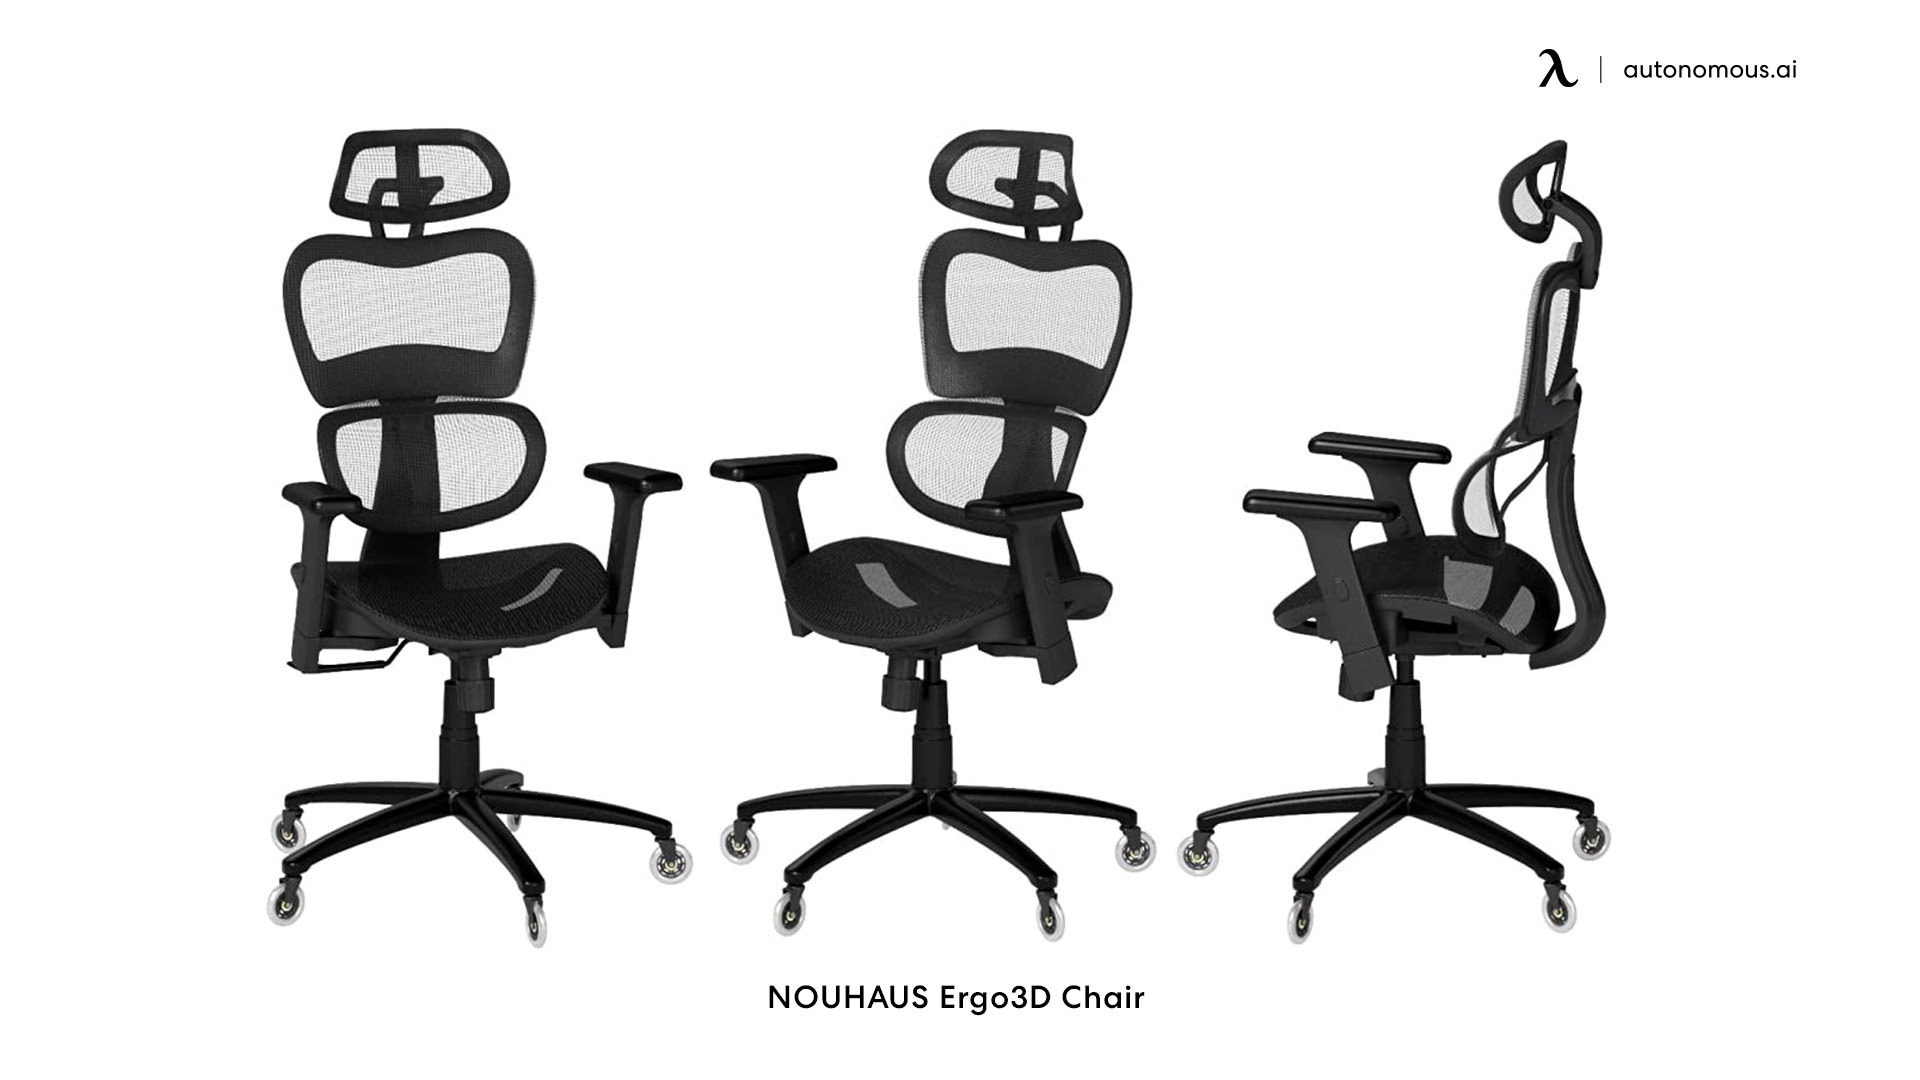 NOUHAUS Ergo3D petite office chair